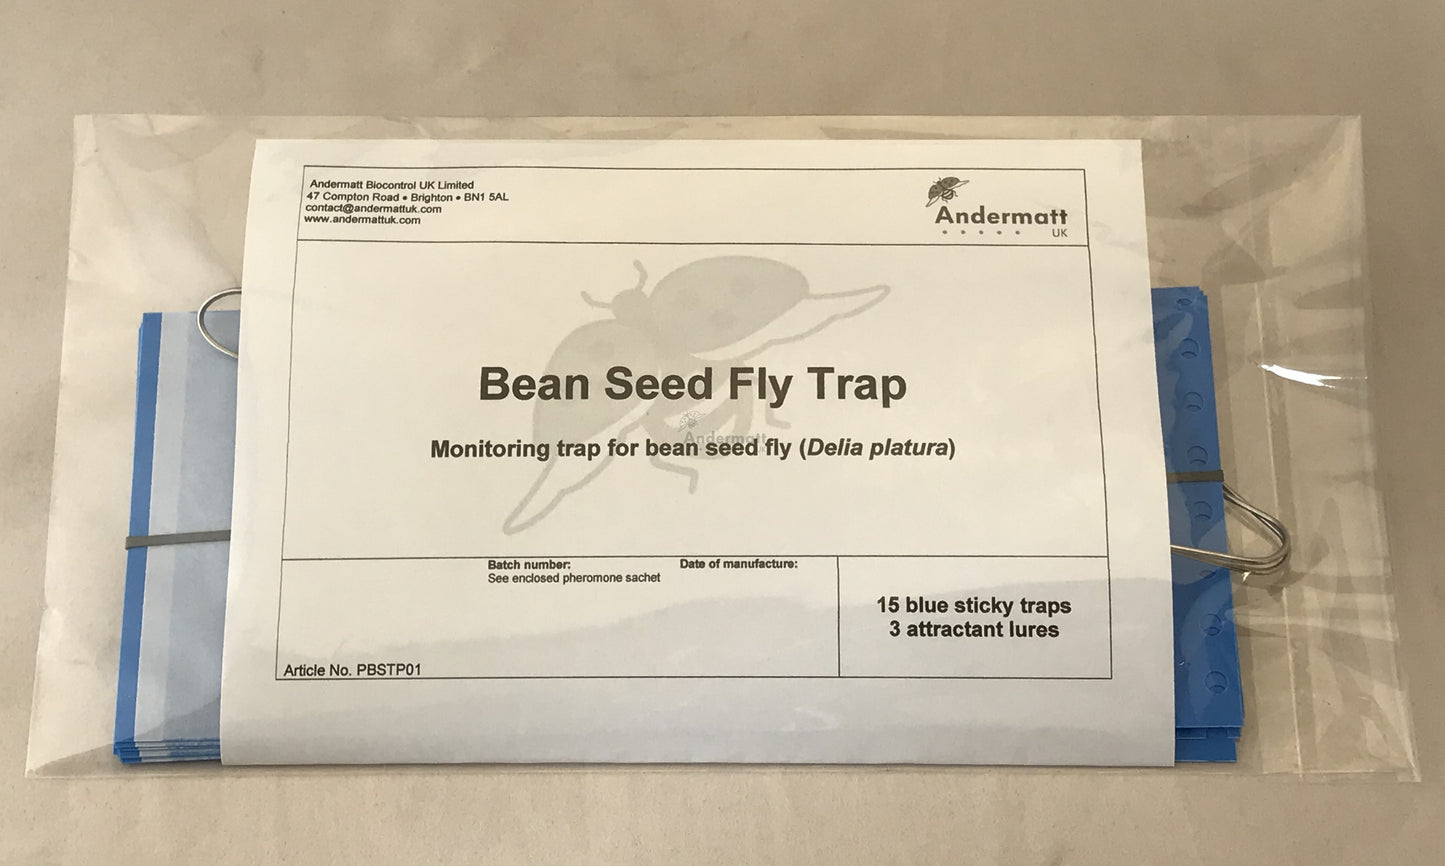 Bean Seed Fly (Delia platura) Trap